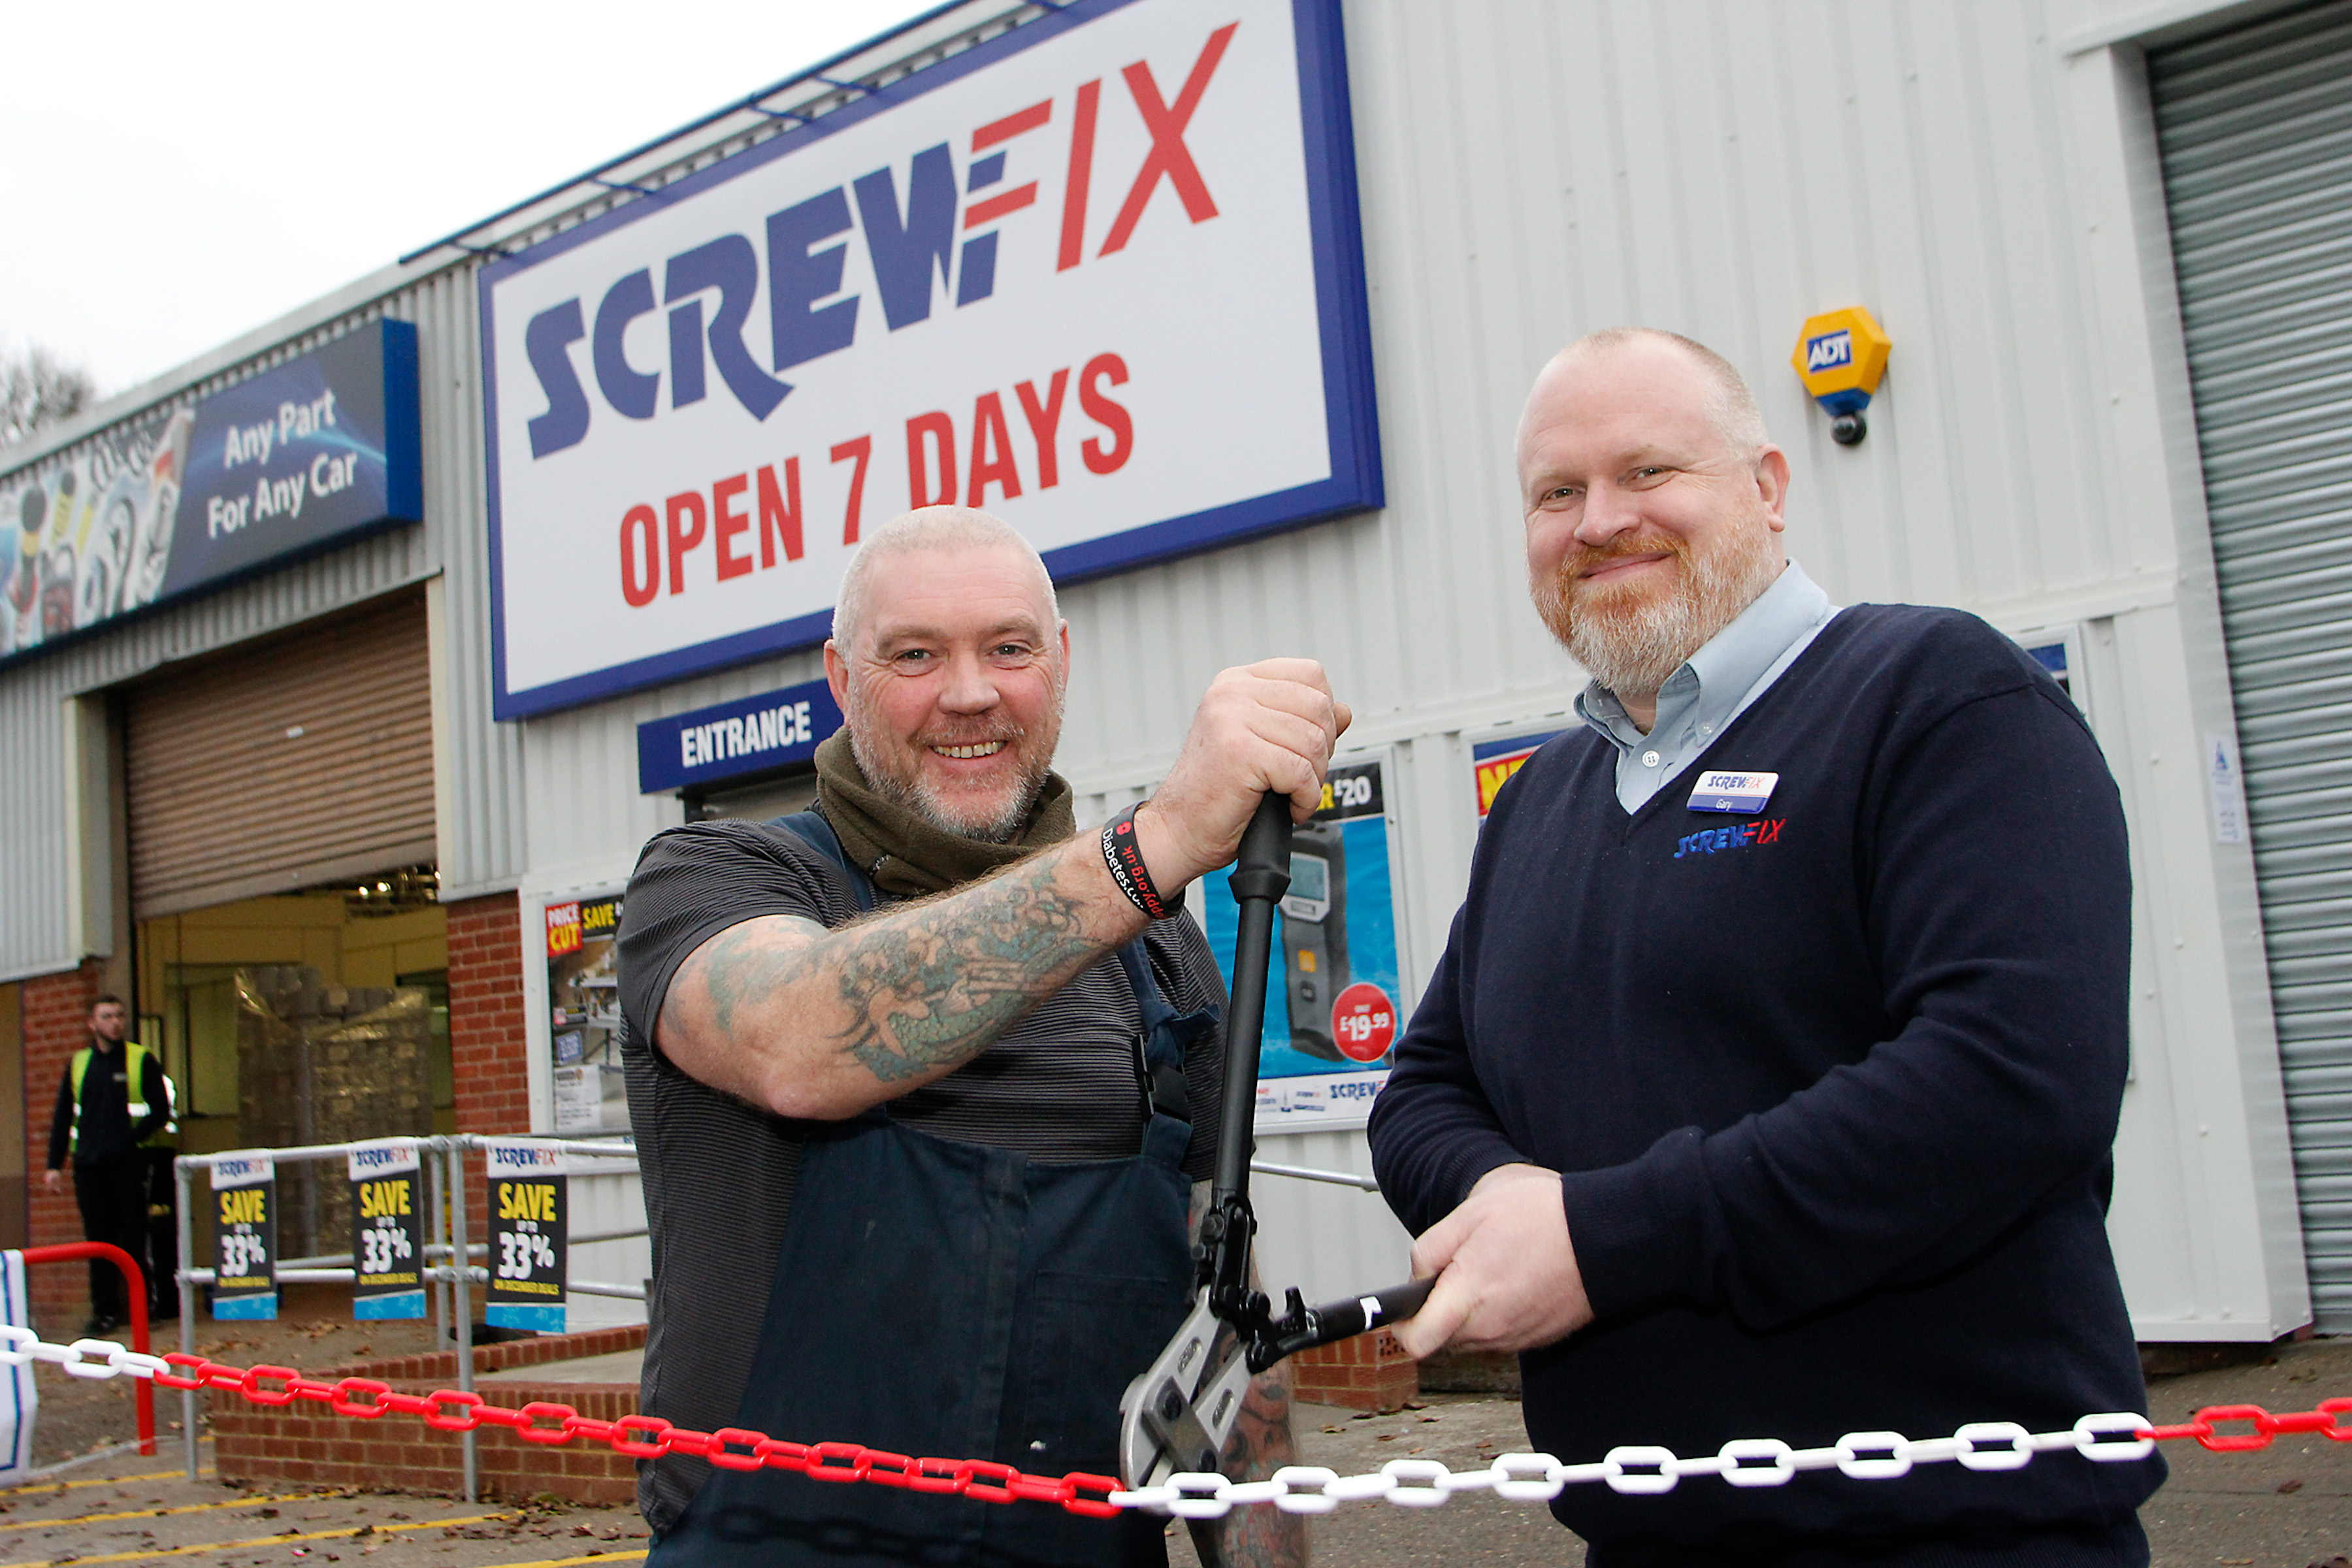 Bury St Edmunds second Screwfix store is declared a runaway success